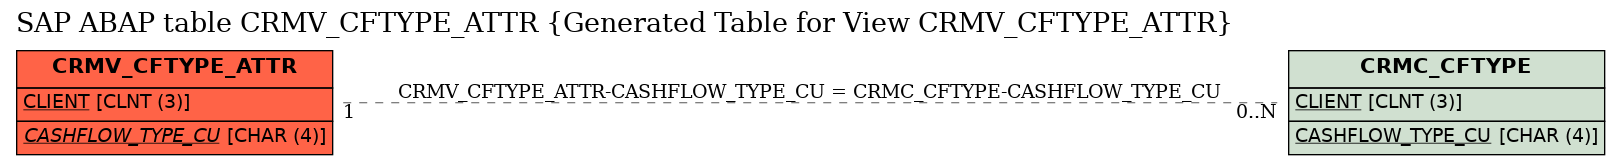 E-R Diagram for table CRMV_CFTYPE_ATTR (Generated Table for View CRMV_CFTYPE_ATTR)